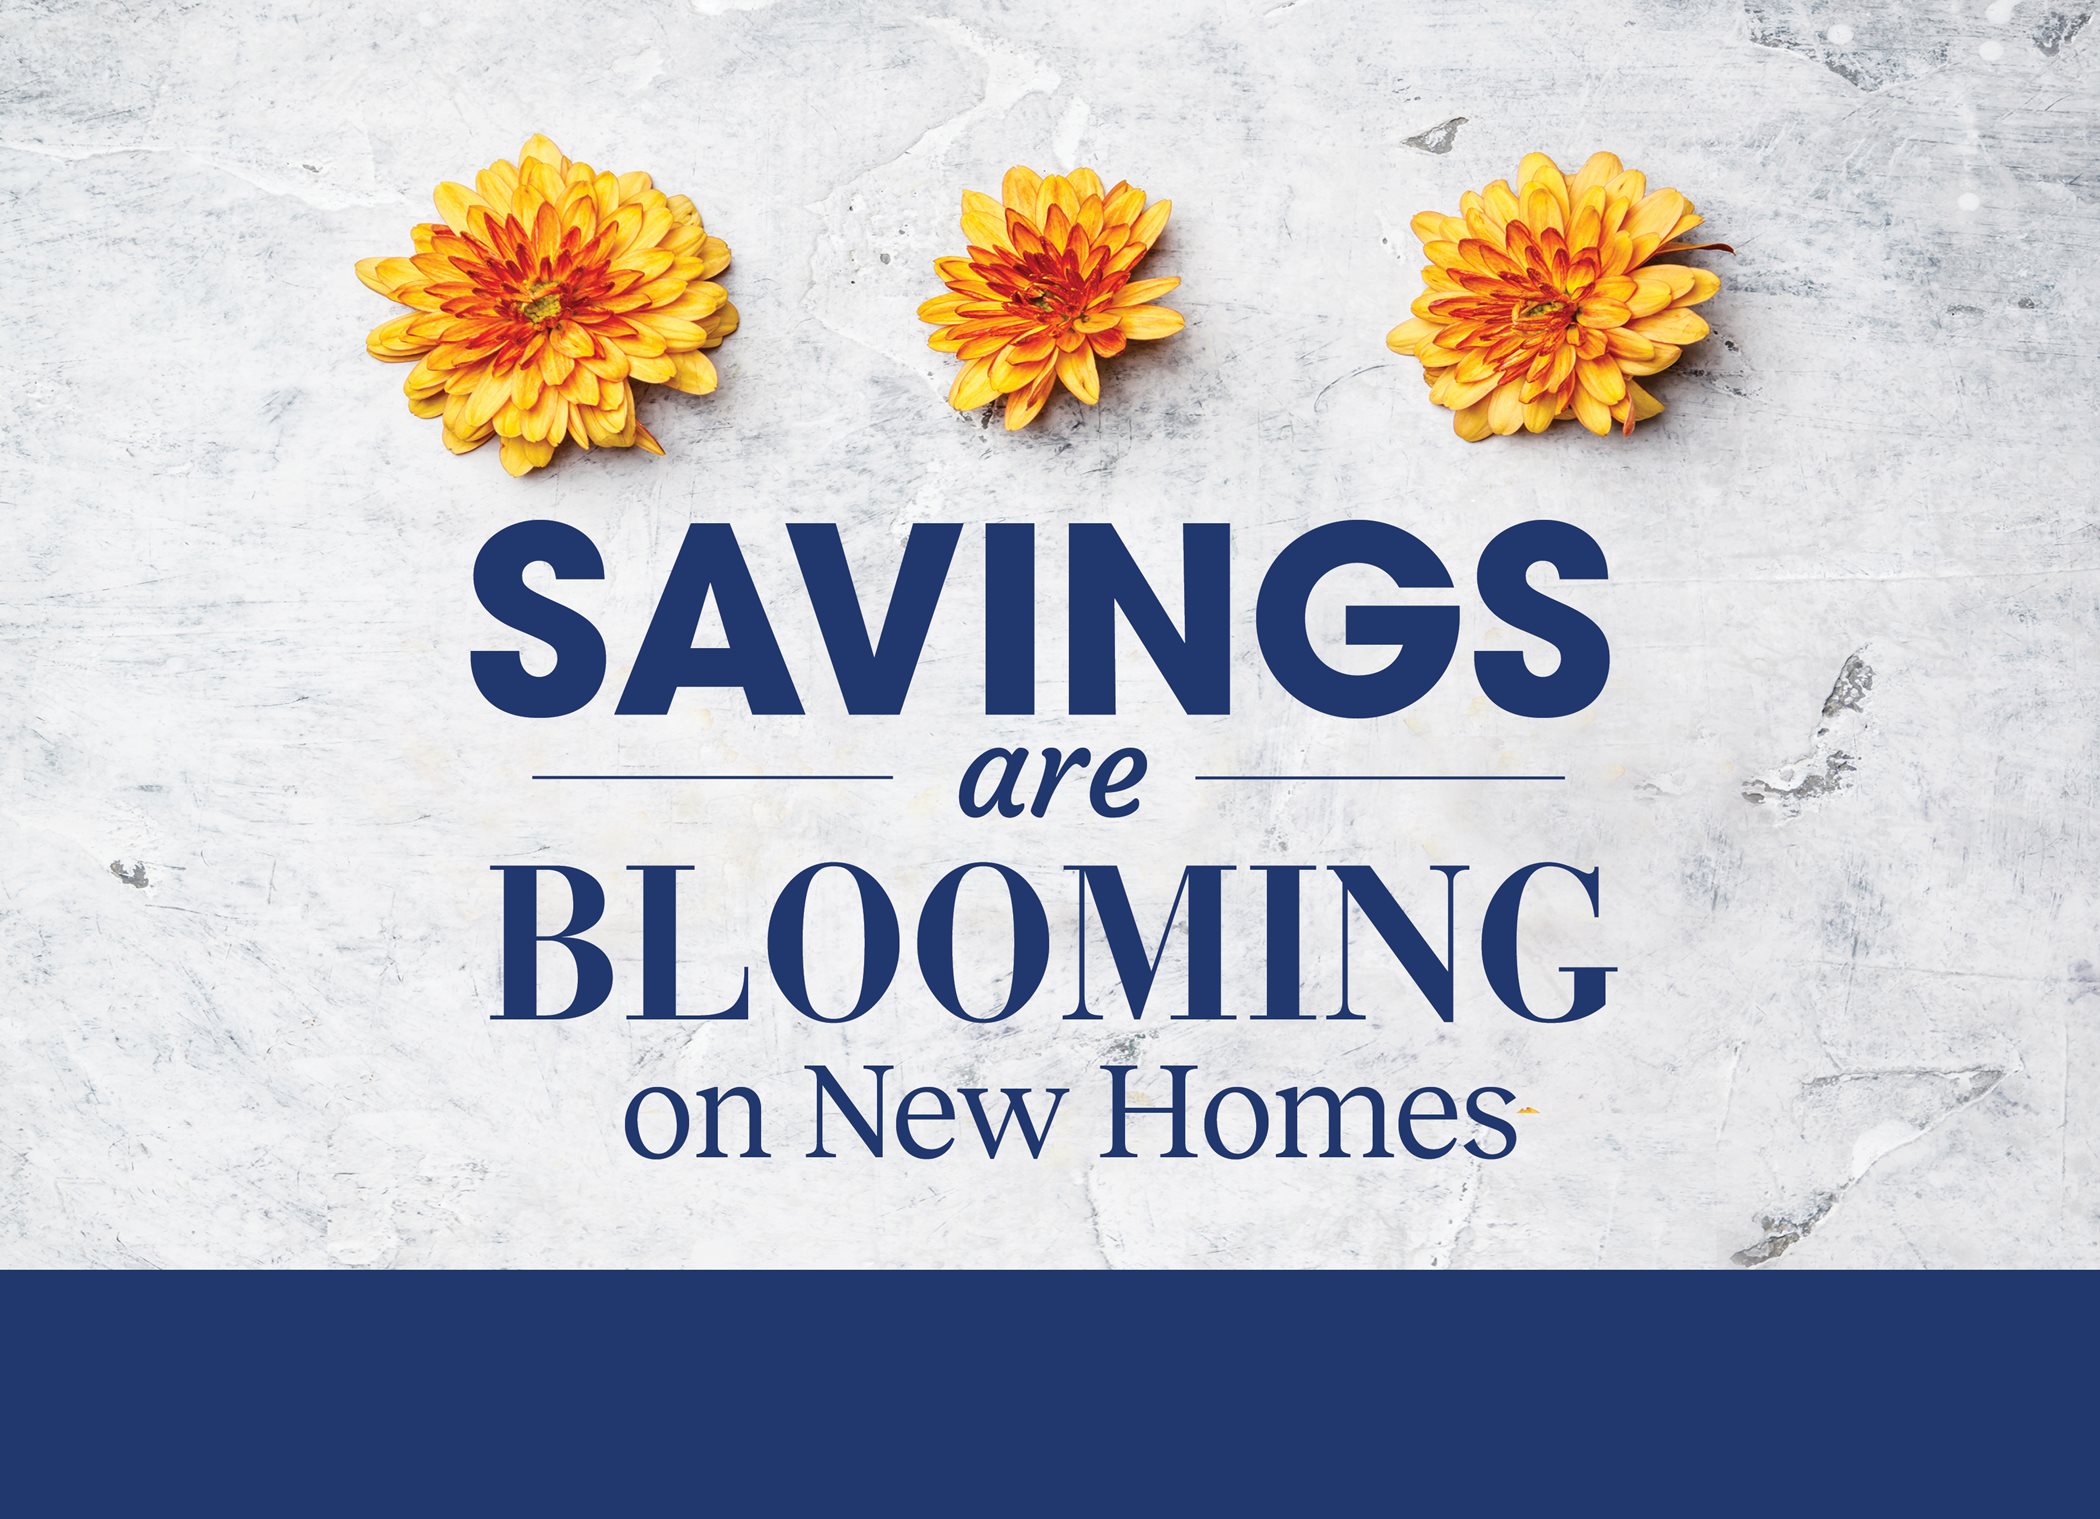 NATL_Savings_Are_Blooming_LPG_896x648_V1